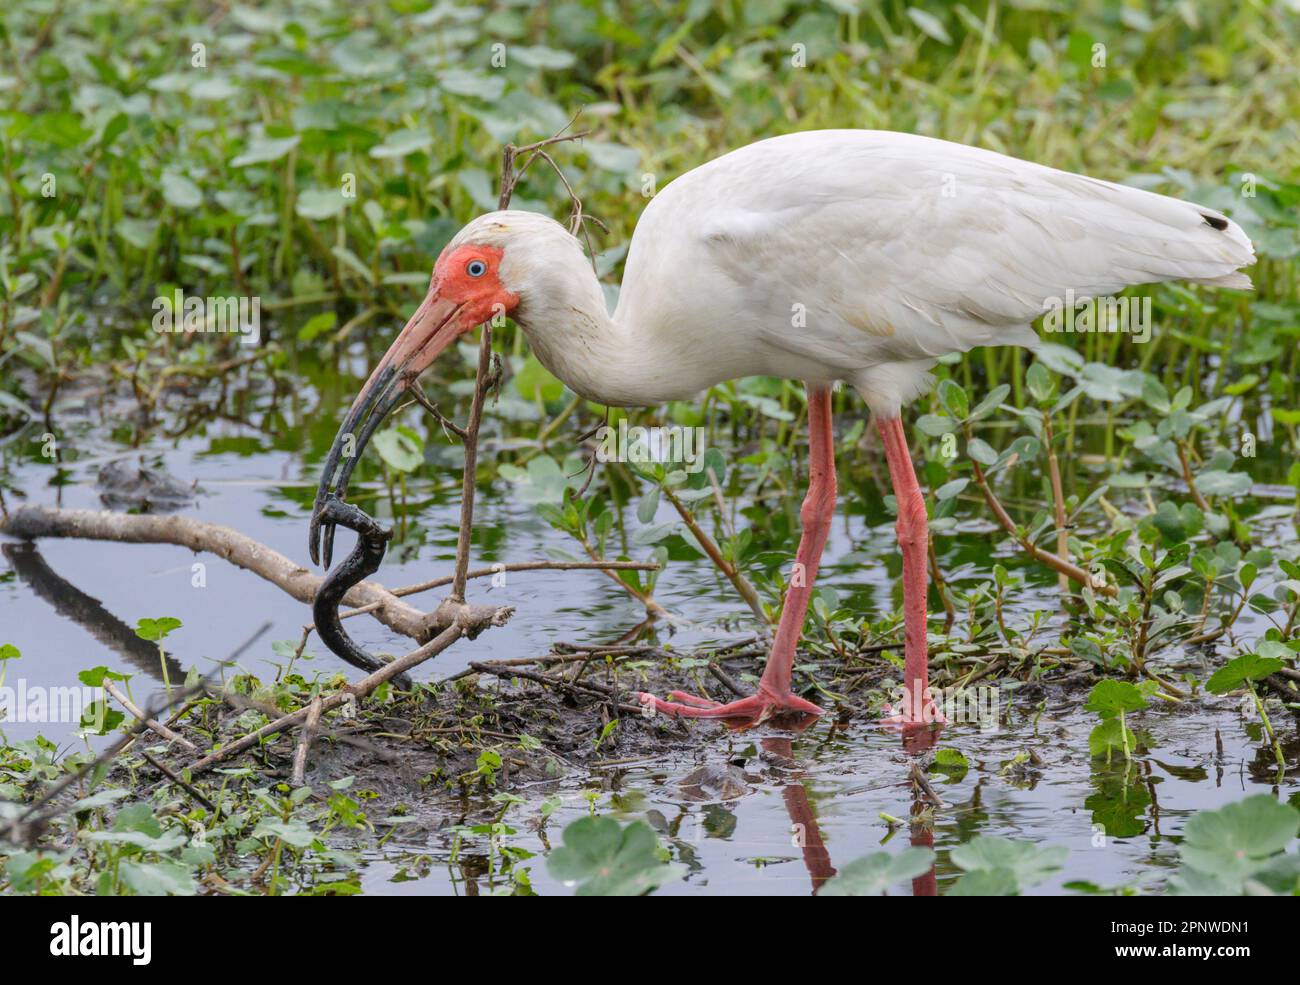 American white ibis (Eudocimus albus) caught a lesser siren (Siren intermedia) in a swamp, Brazos Bend State Park, Needville, Texas, USA. Stock Photo